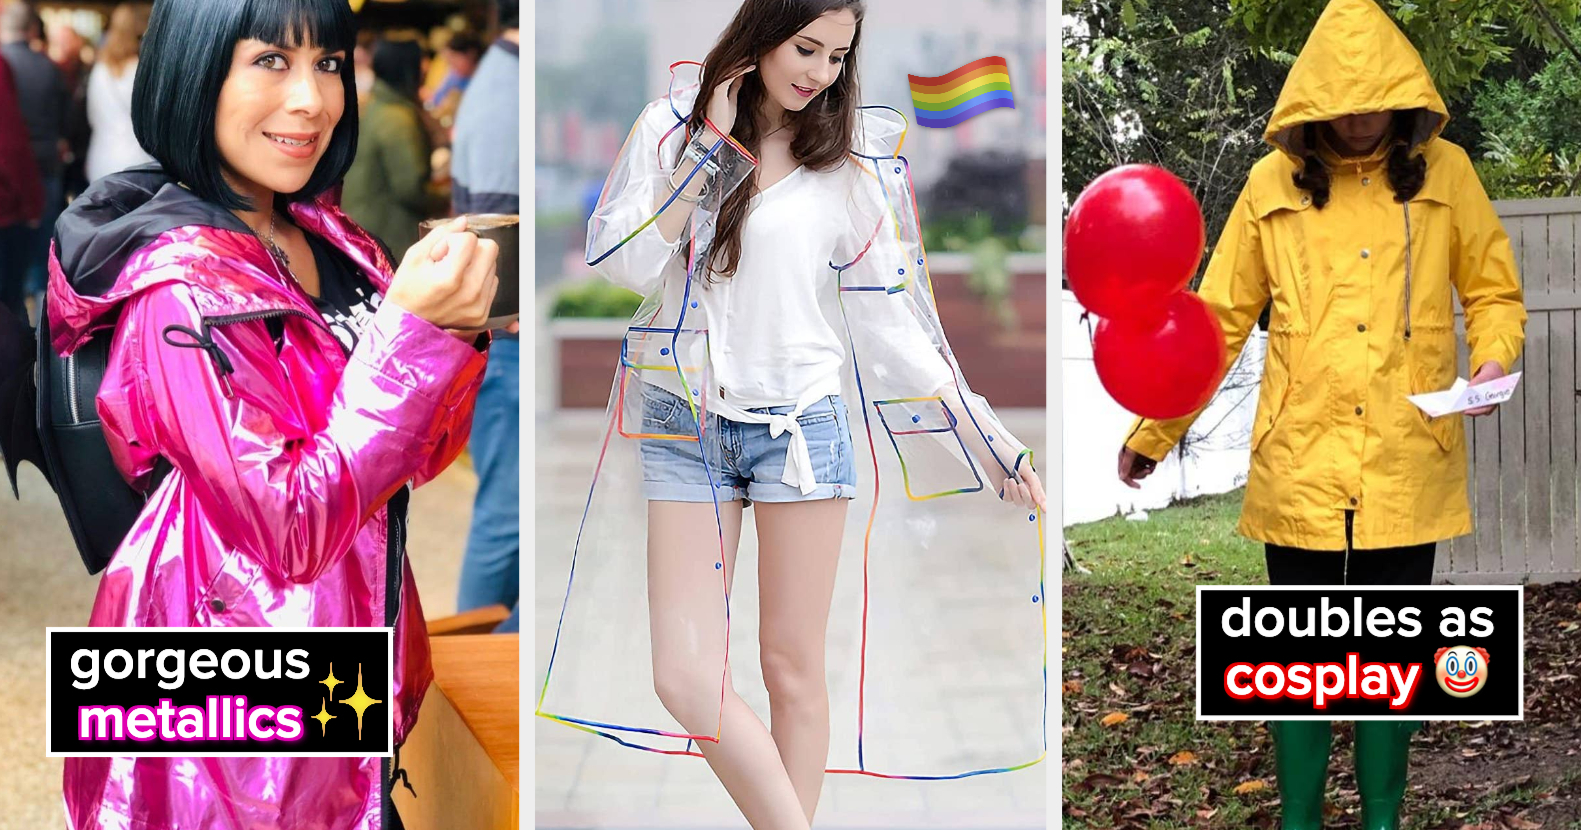 22 Fun Raincoats That'll Make You Look Forward To Rain